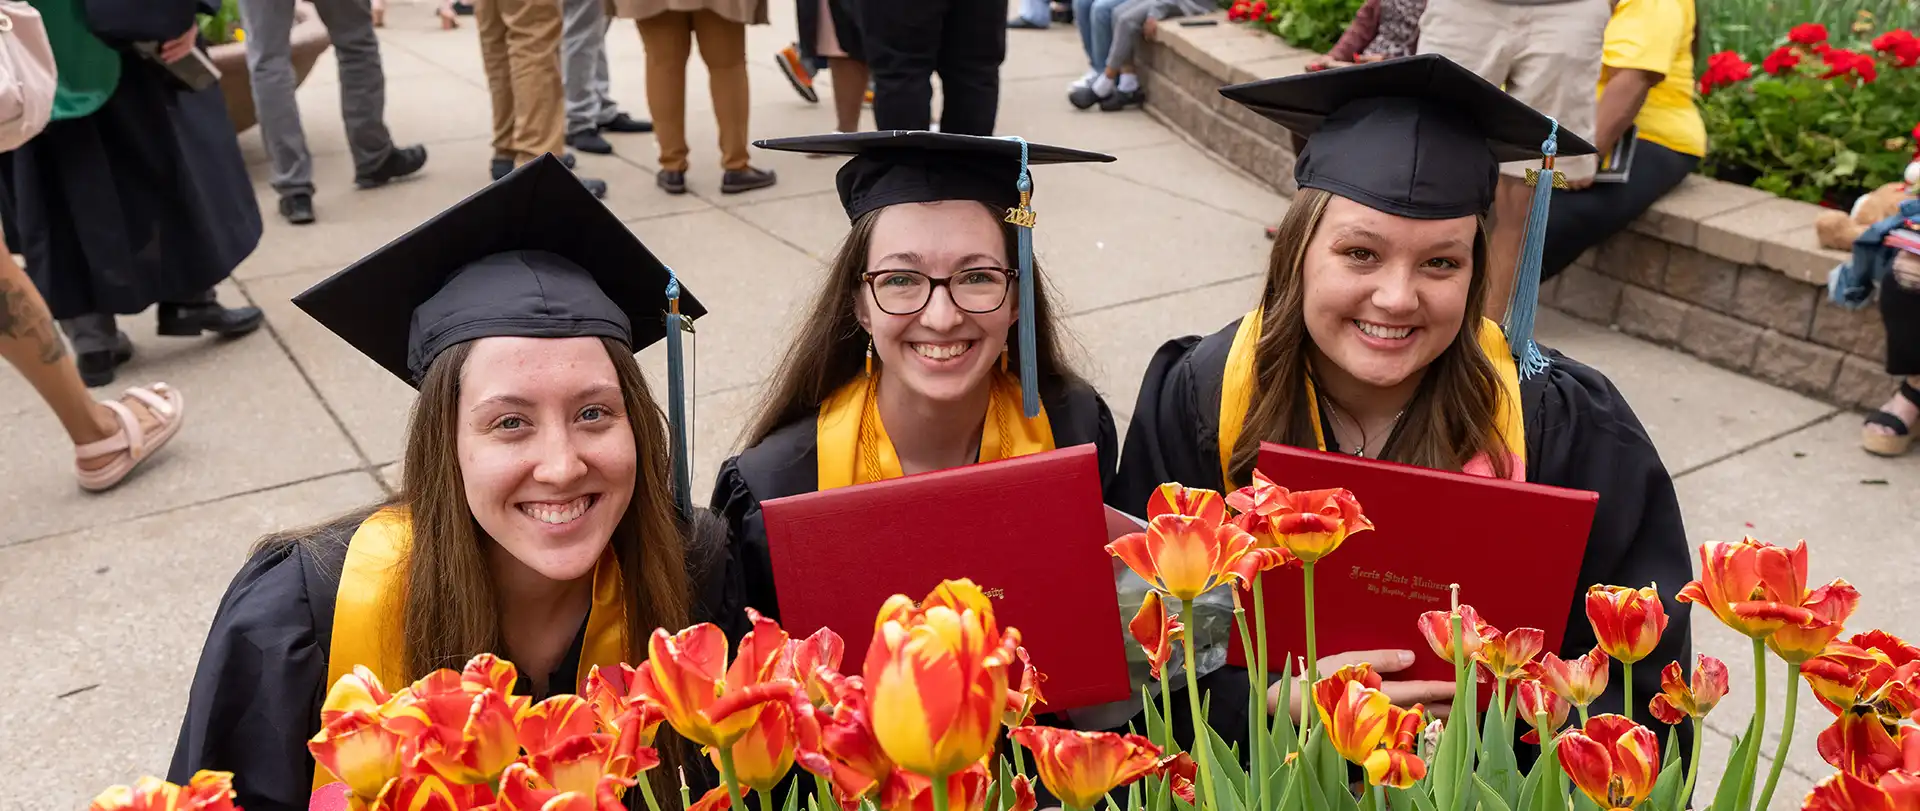 Graduating students holding diplomas amid flowers